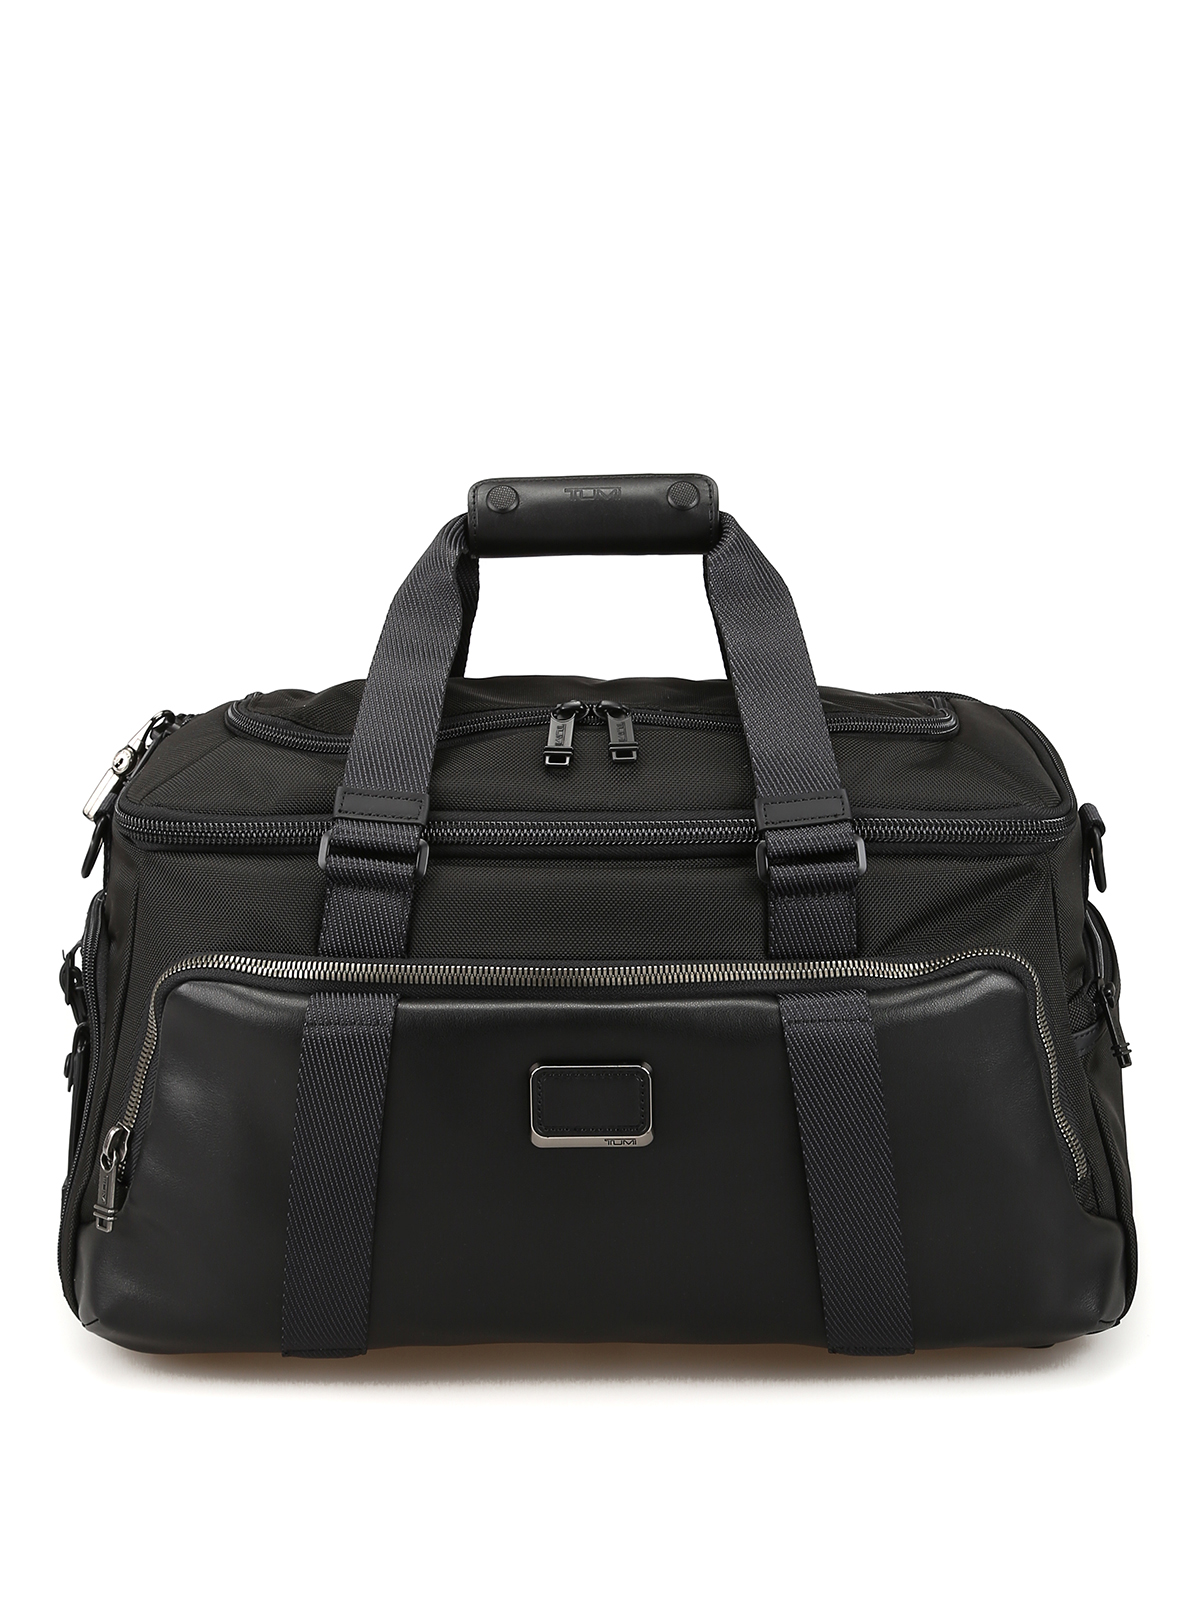 Luggage & Travel bags Tumi - Mccoy nylon gym bag - 0232322D | iKRIX.com